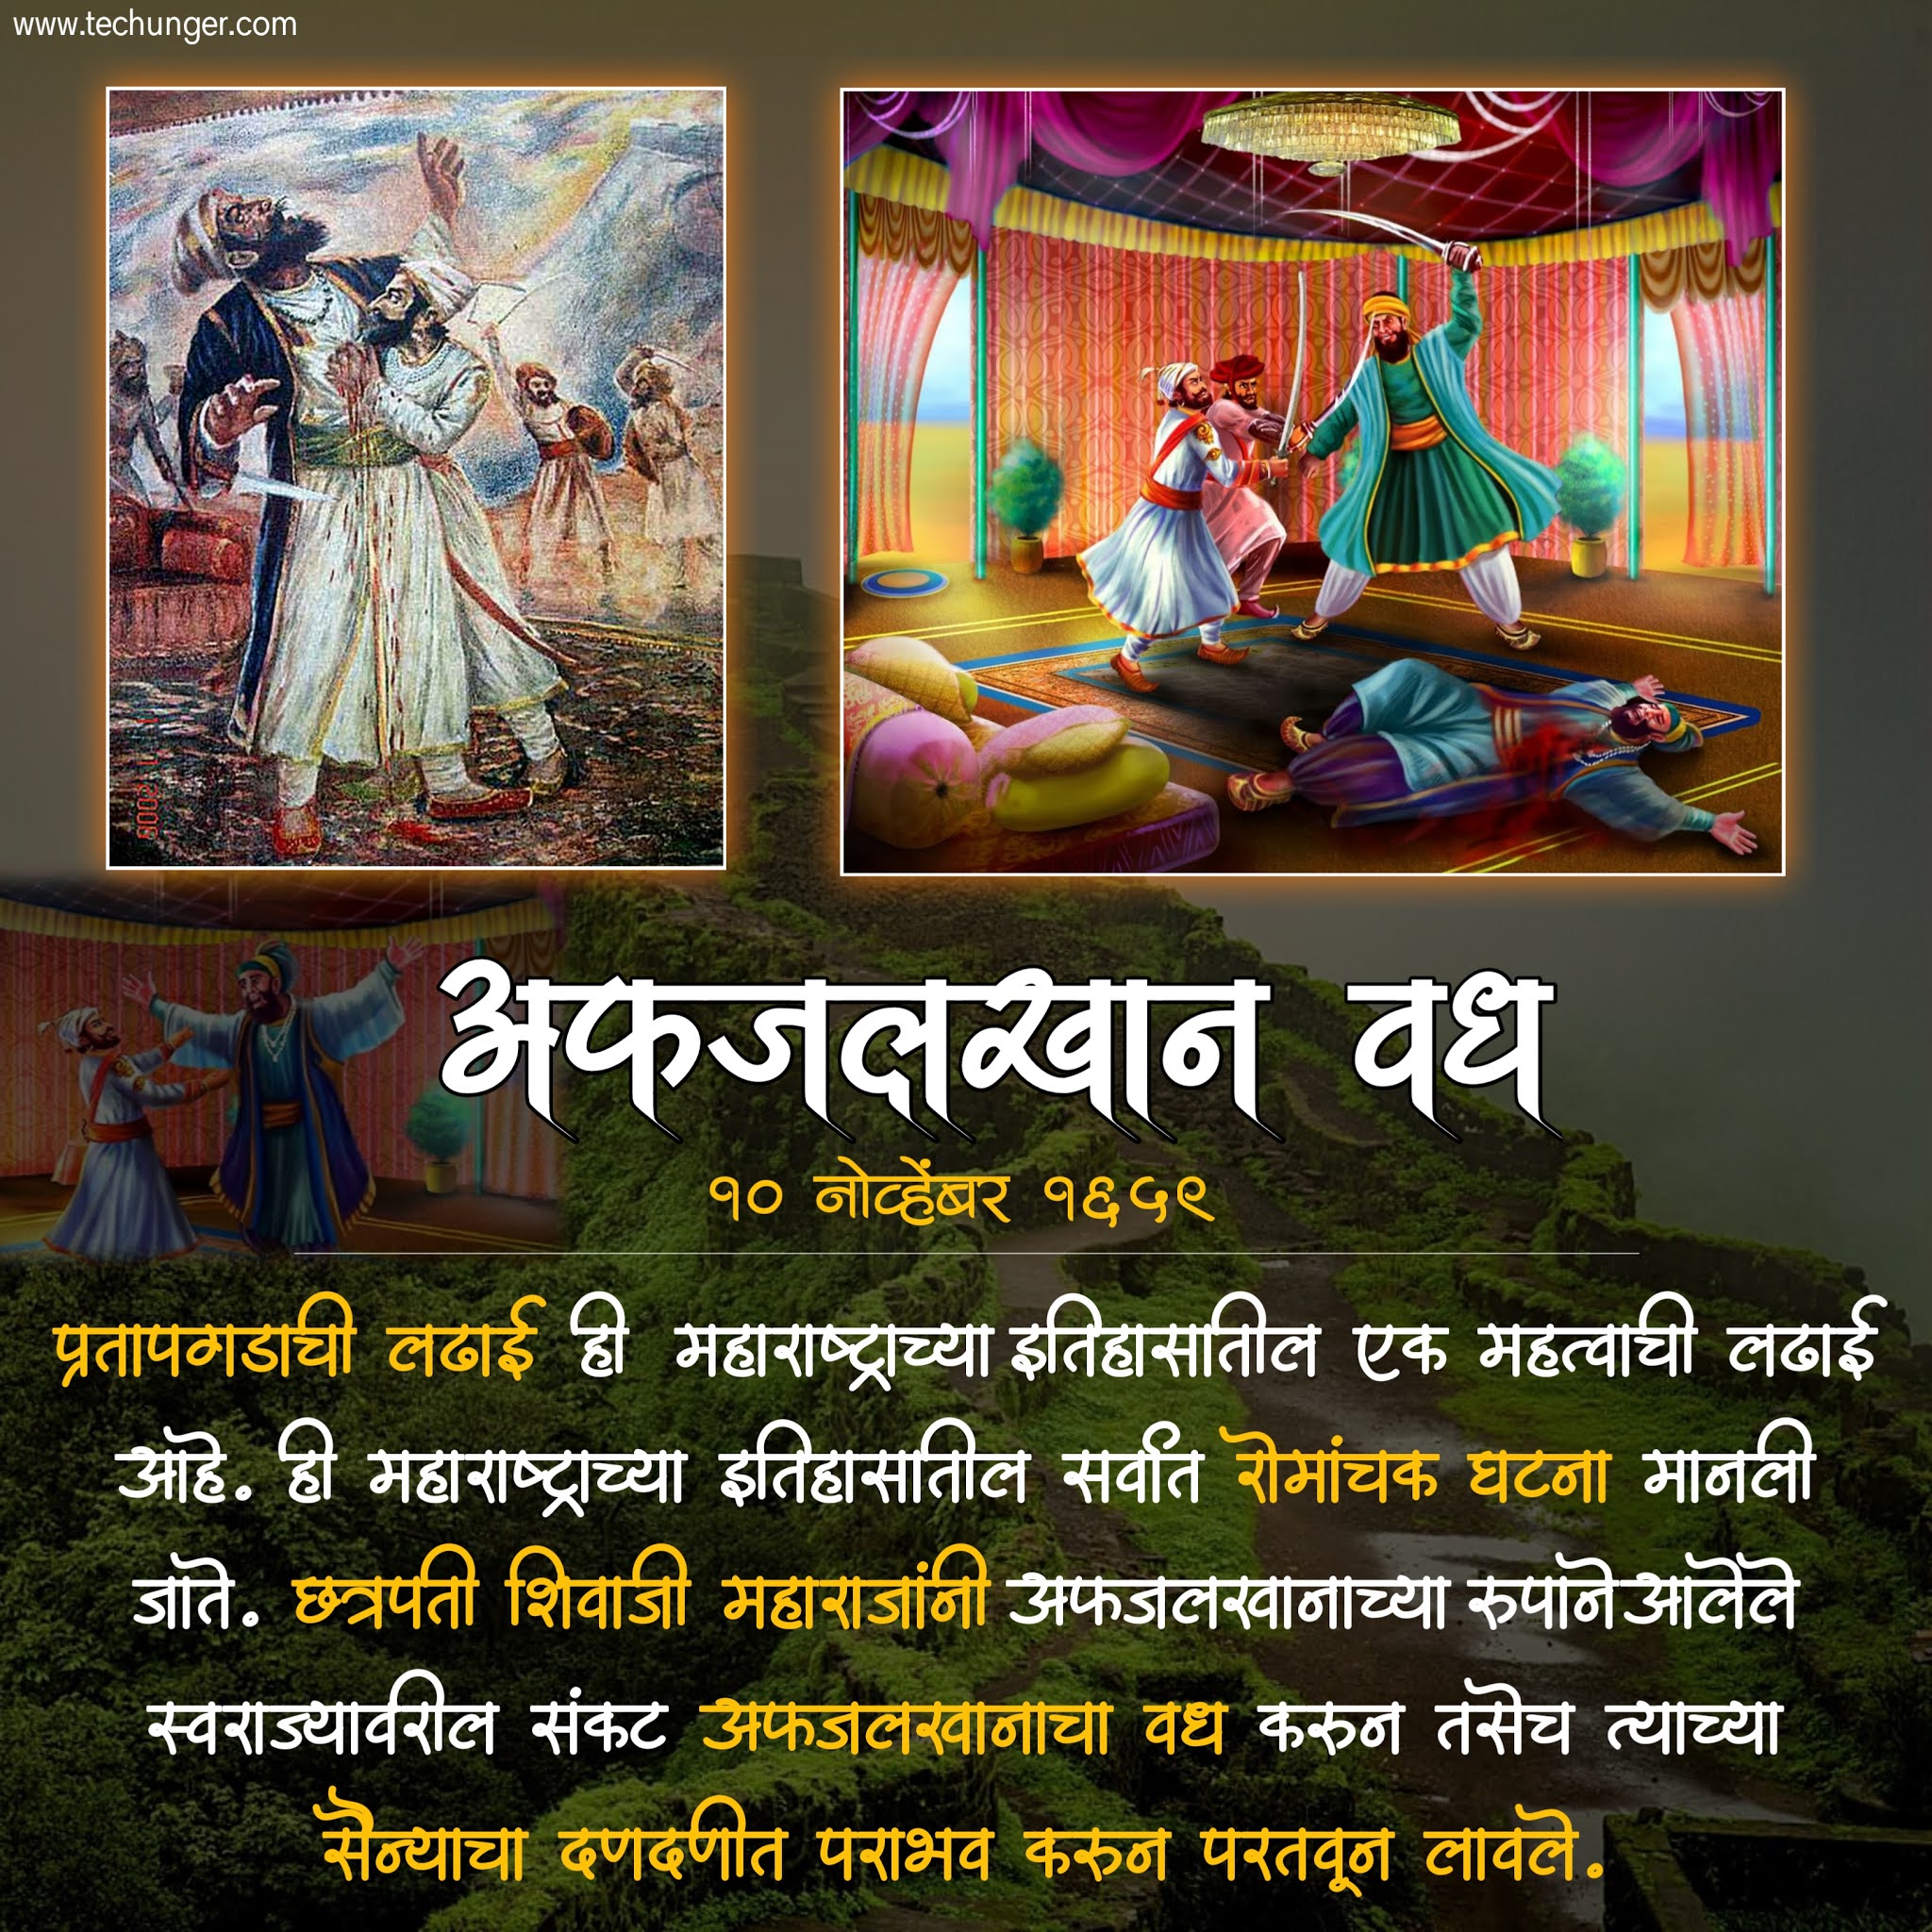 अफजल खान वध पोस्टर, afjal khan, shiwaji Maharaj, shiwaji Maharaj poster, techunger post, saurabh chaudhari